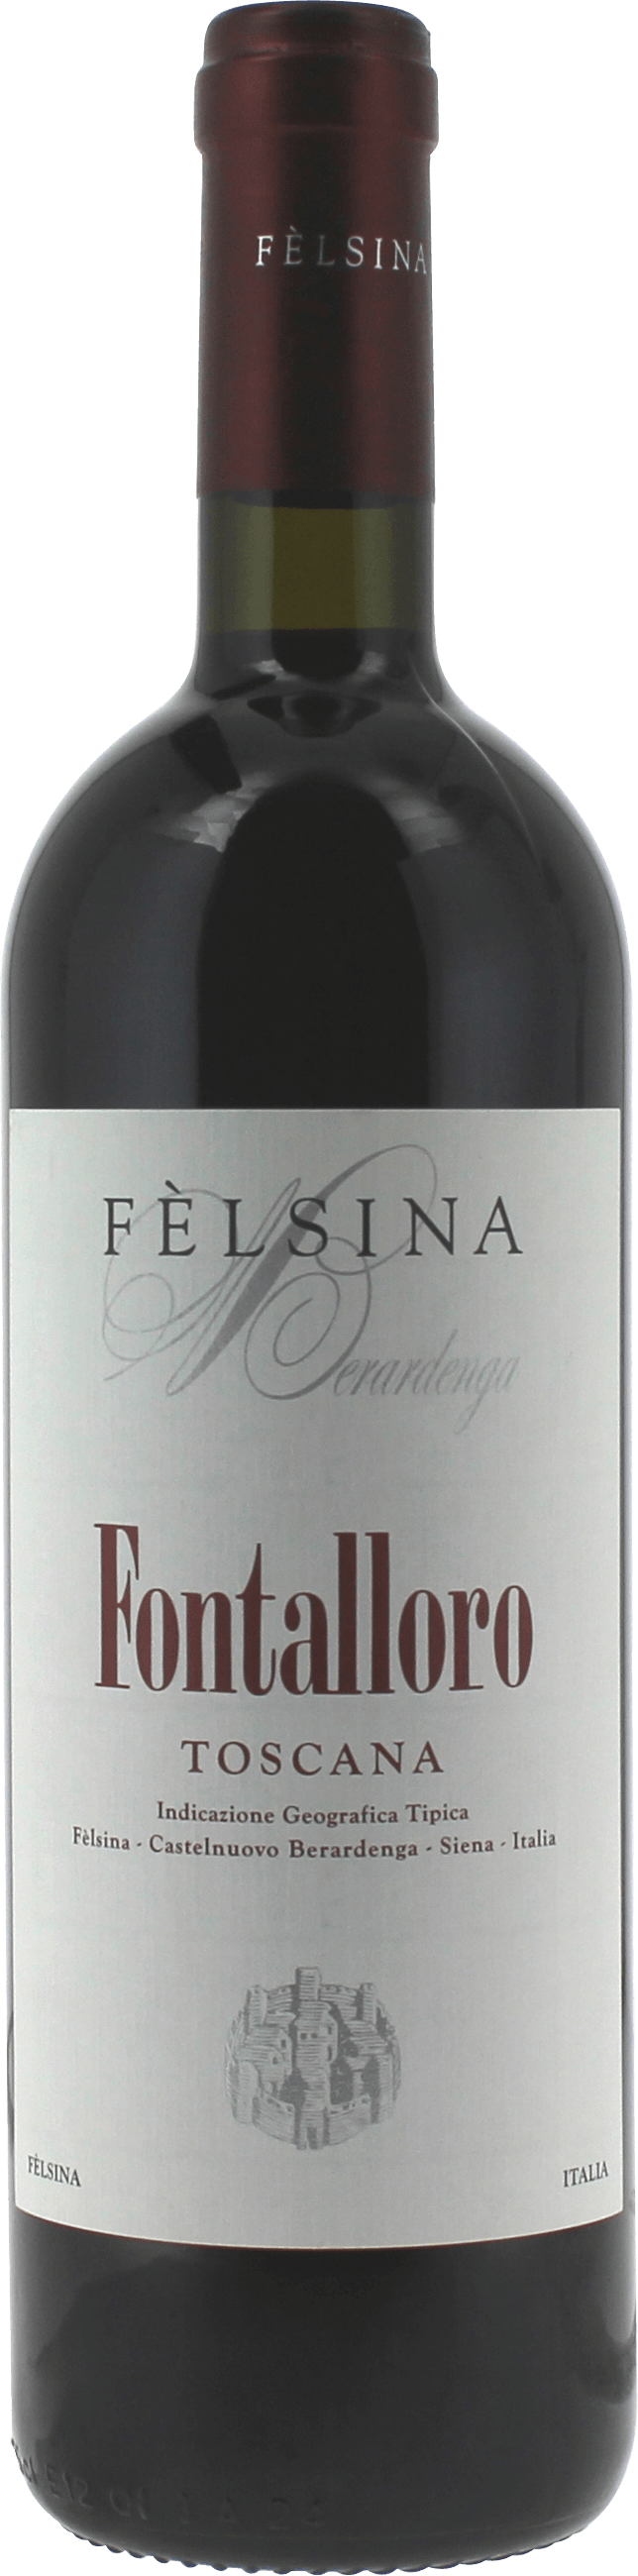 Felsina - fontalloro sangiovese  - toscane 2015  , Vin italien